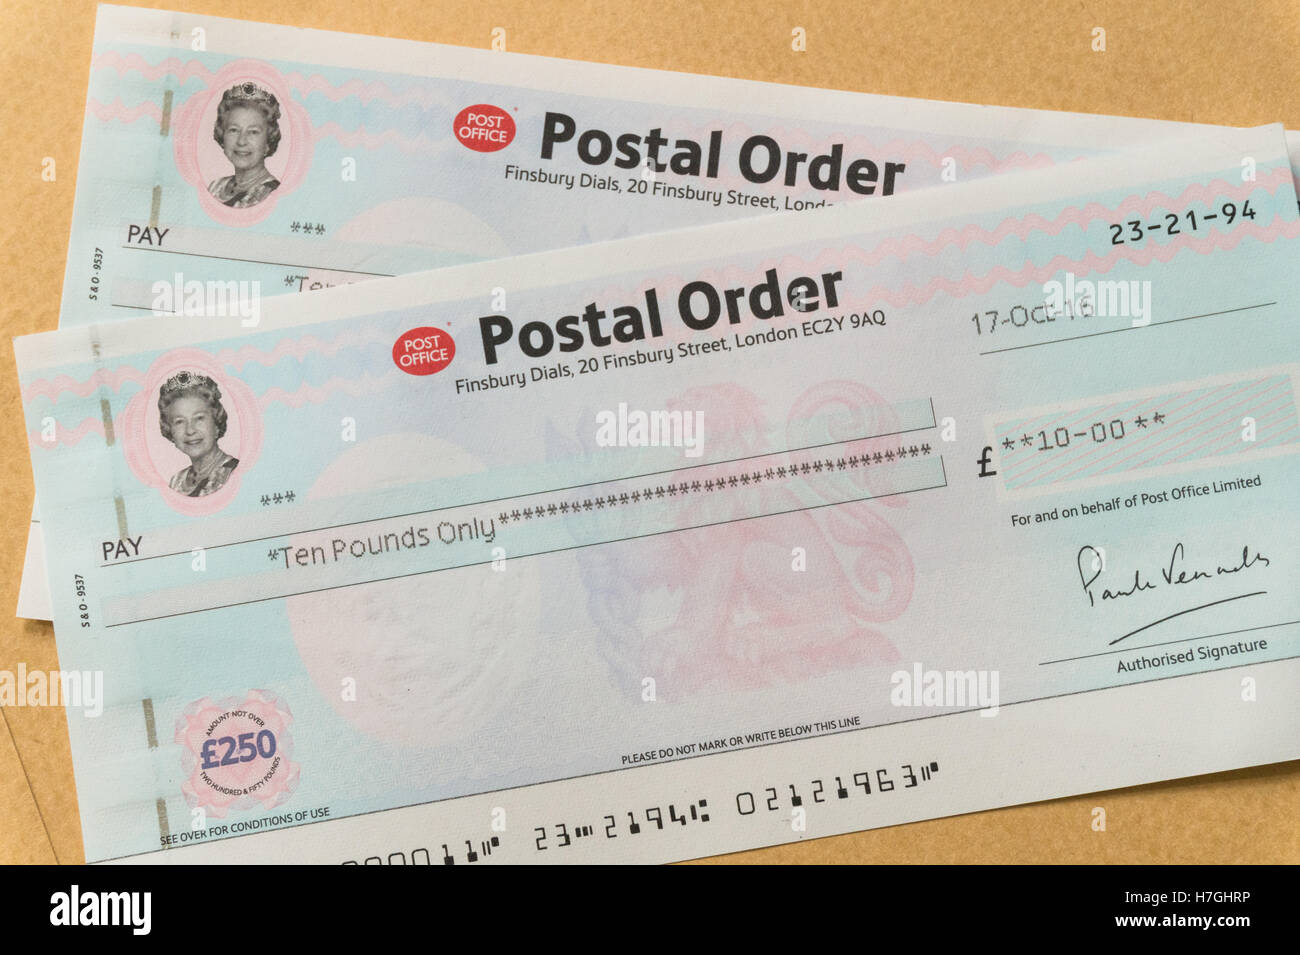 Royal Mail postal order Stock Photo